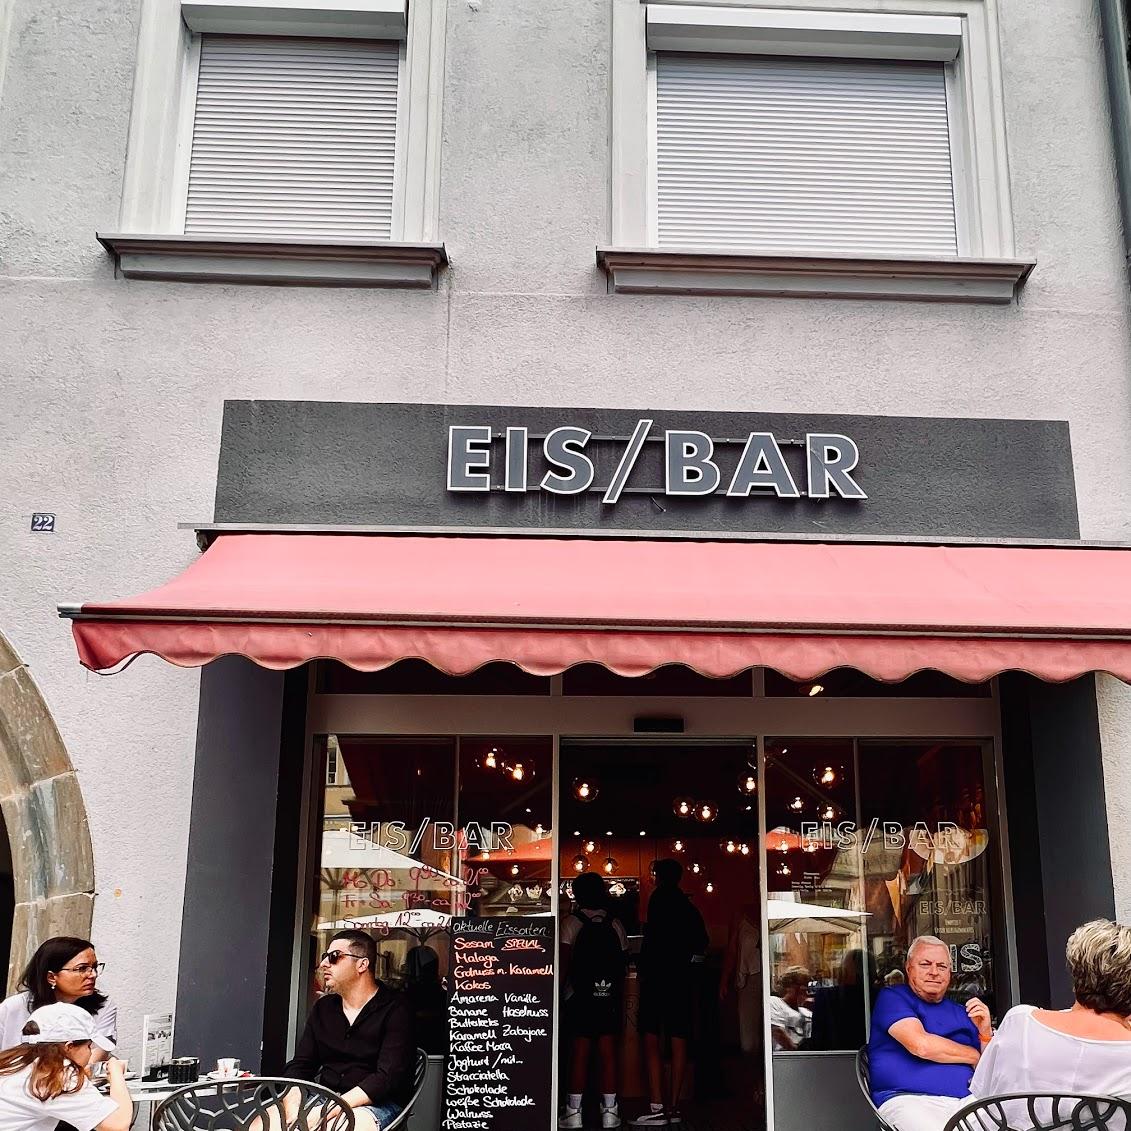 Restaurant "Eisbar Bayreuth" in Bayreuth